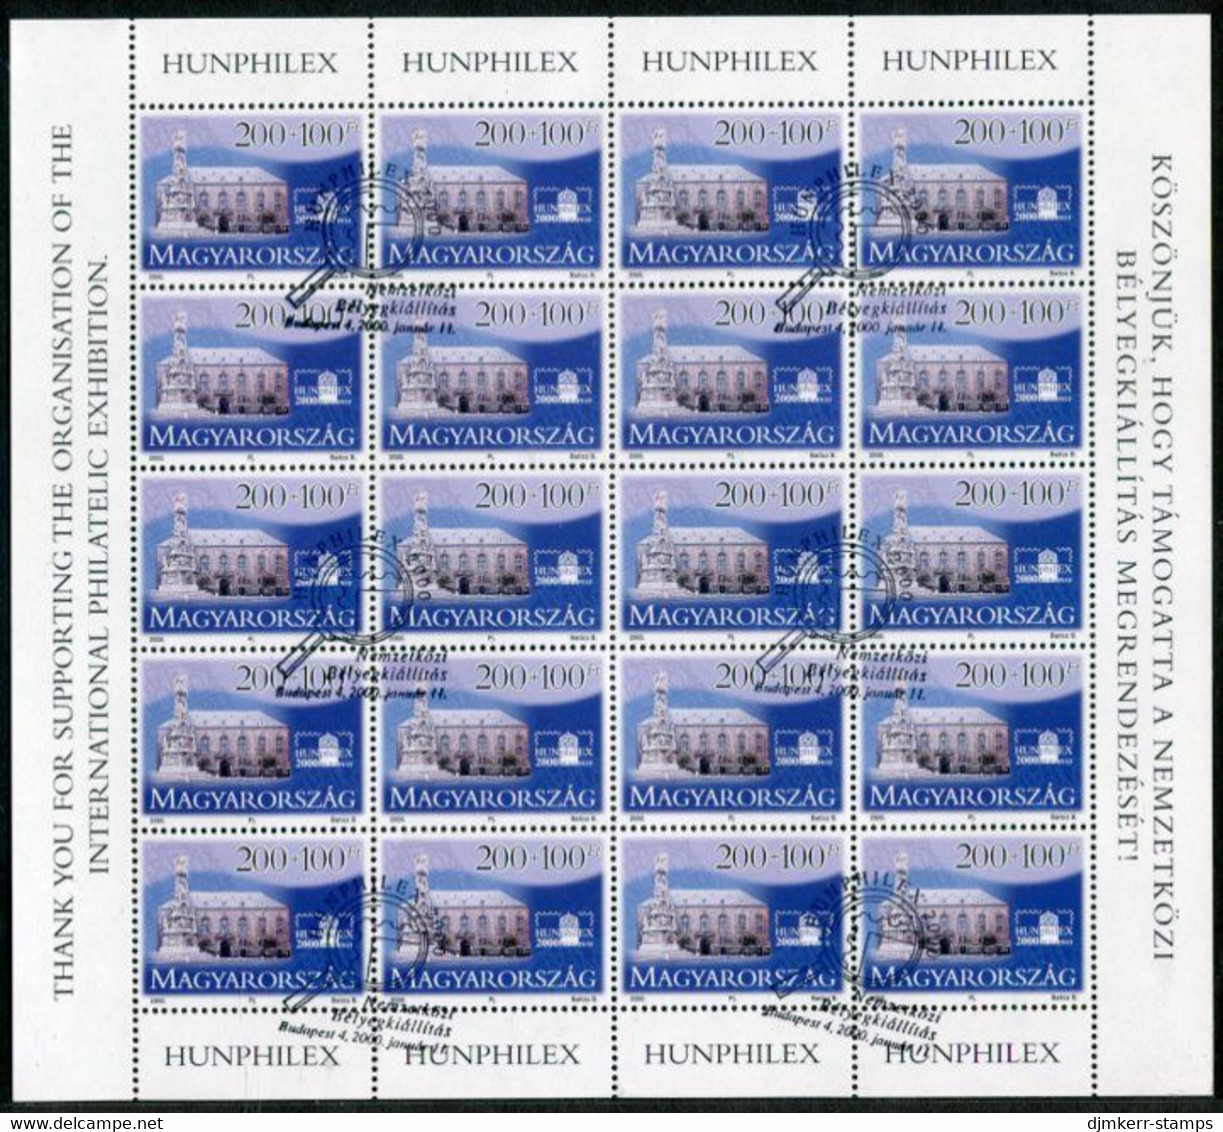 HUNGARY 2000 HUNPHILEX Stamp Exhibition. Sheet Of 20, Cancelled.  Michel 4578 - Blocks & Kleinbögen